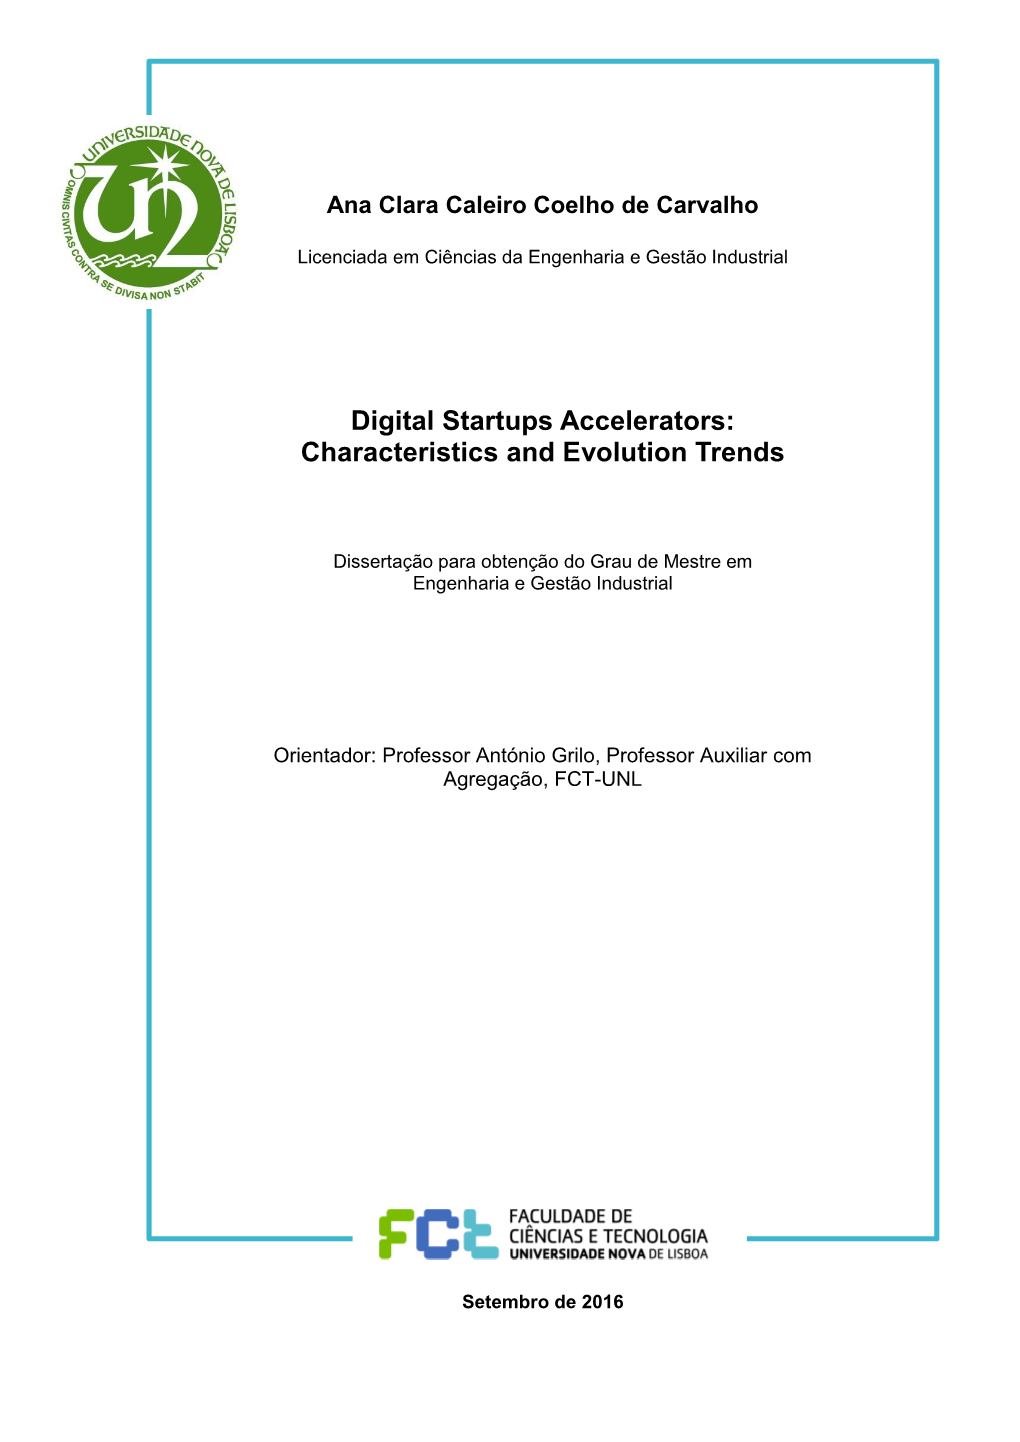 Digital Startups Accelerators: Characteristics and Evolution Trends